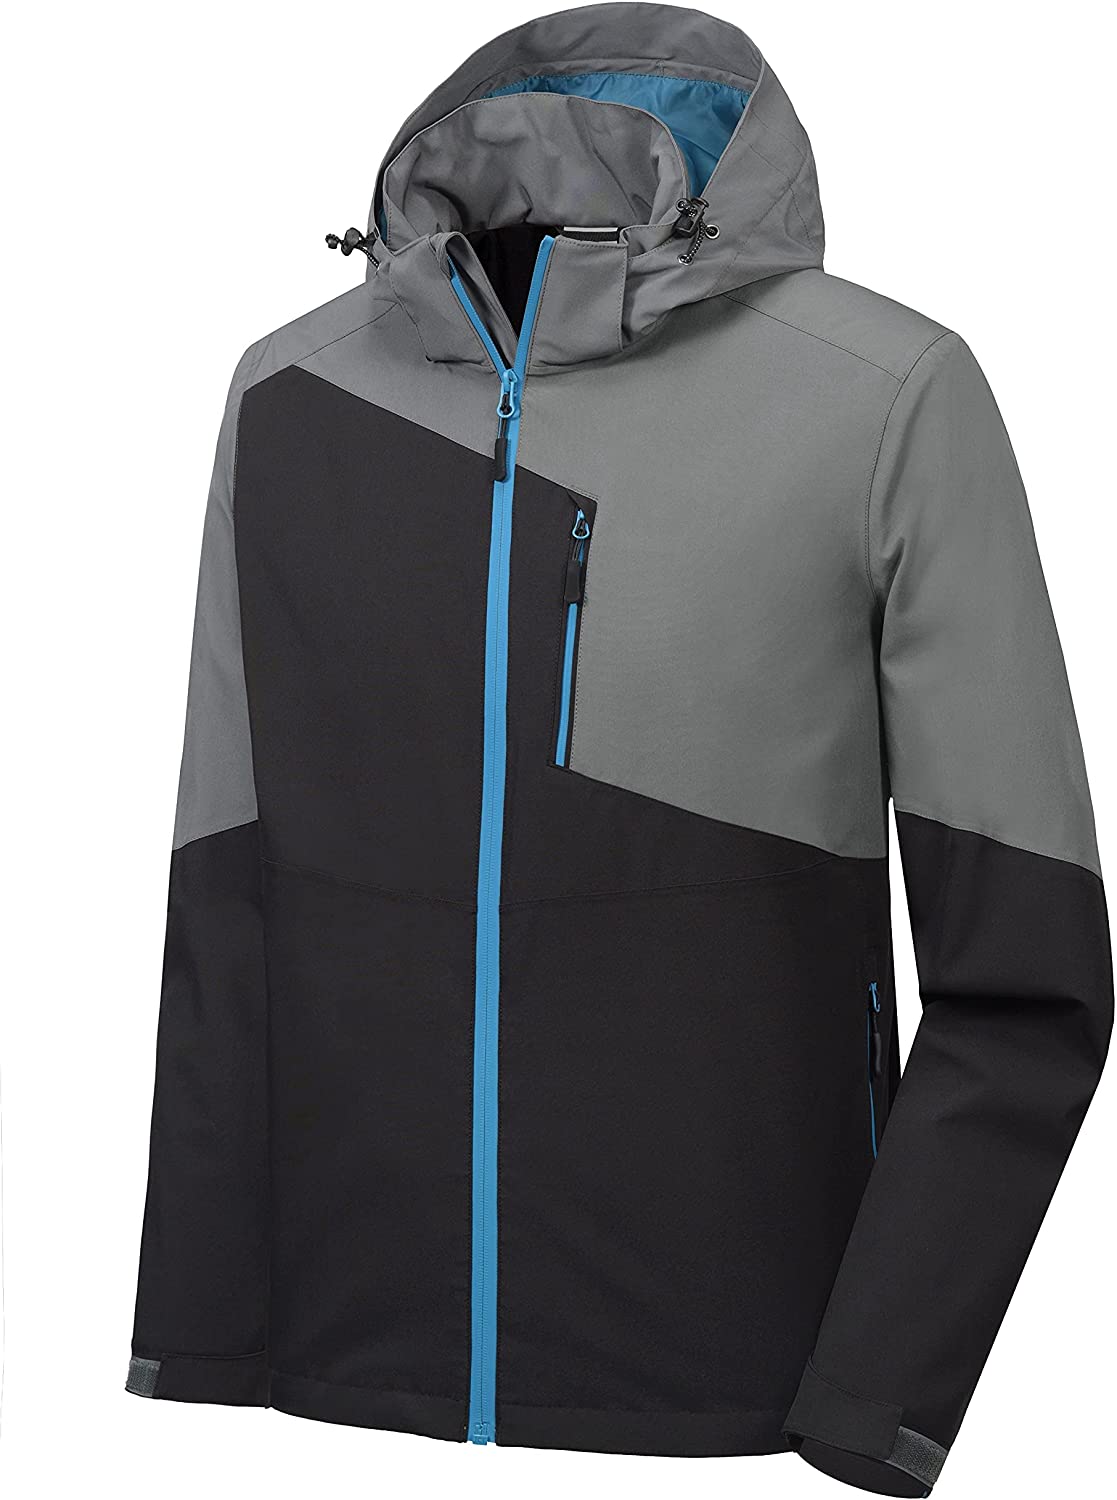 Mapamyumco Mens Lightweight Water-Resistant Windbreaker Windproof Hooded Jacket